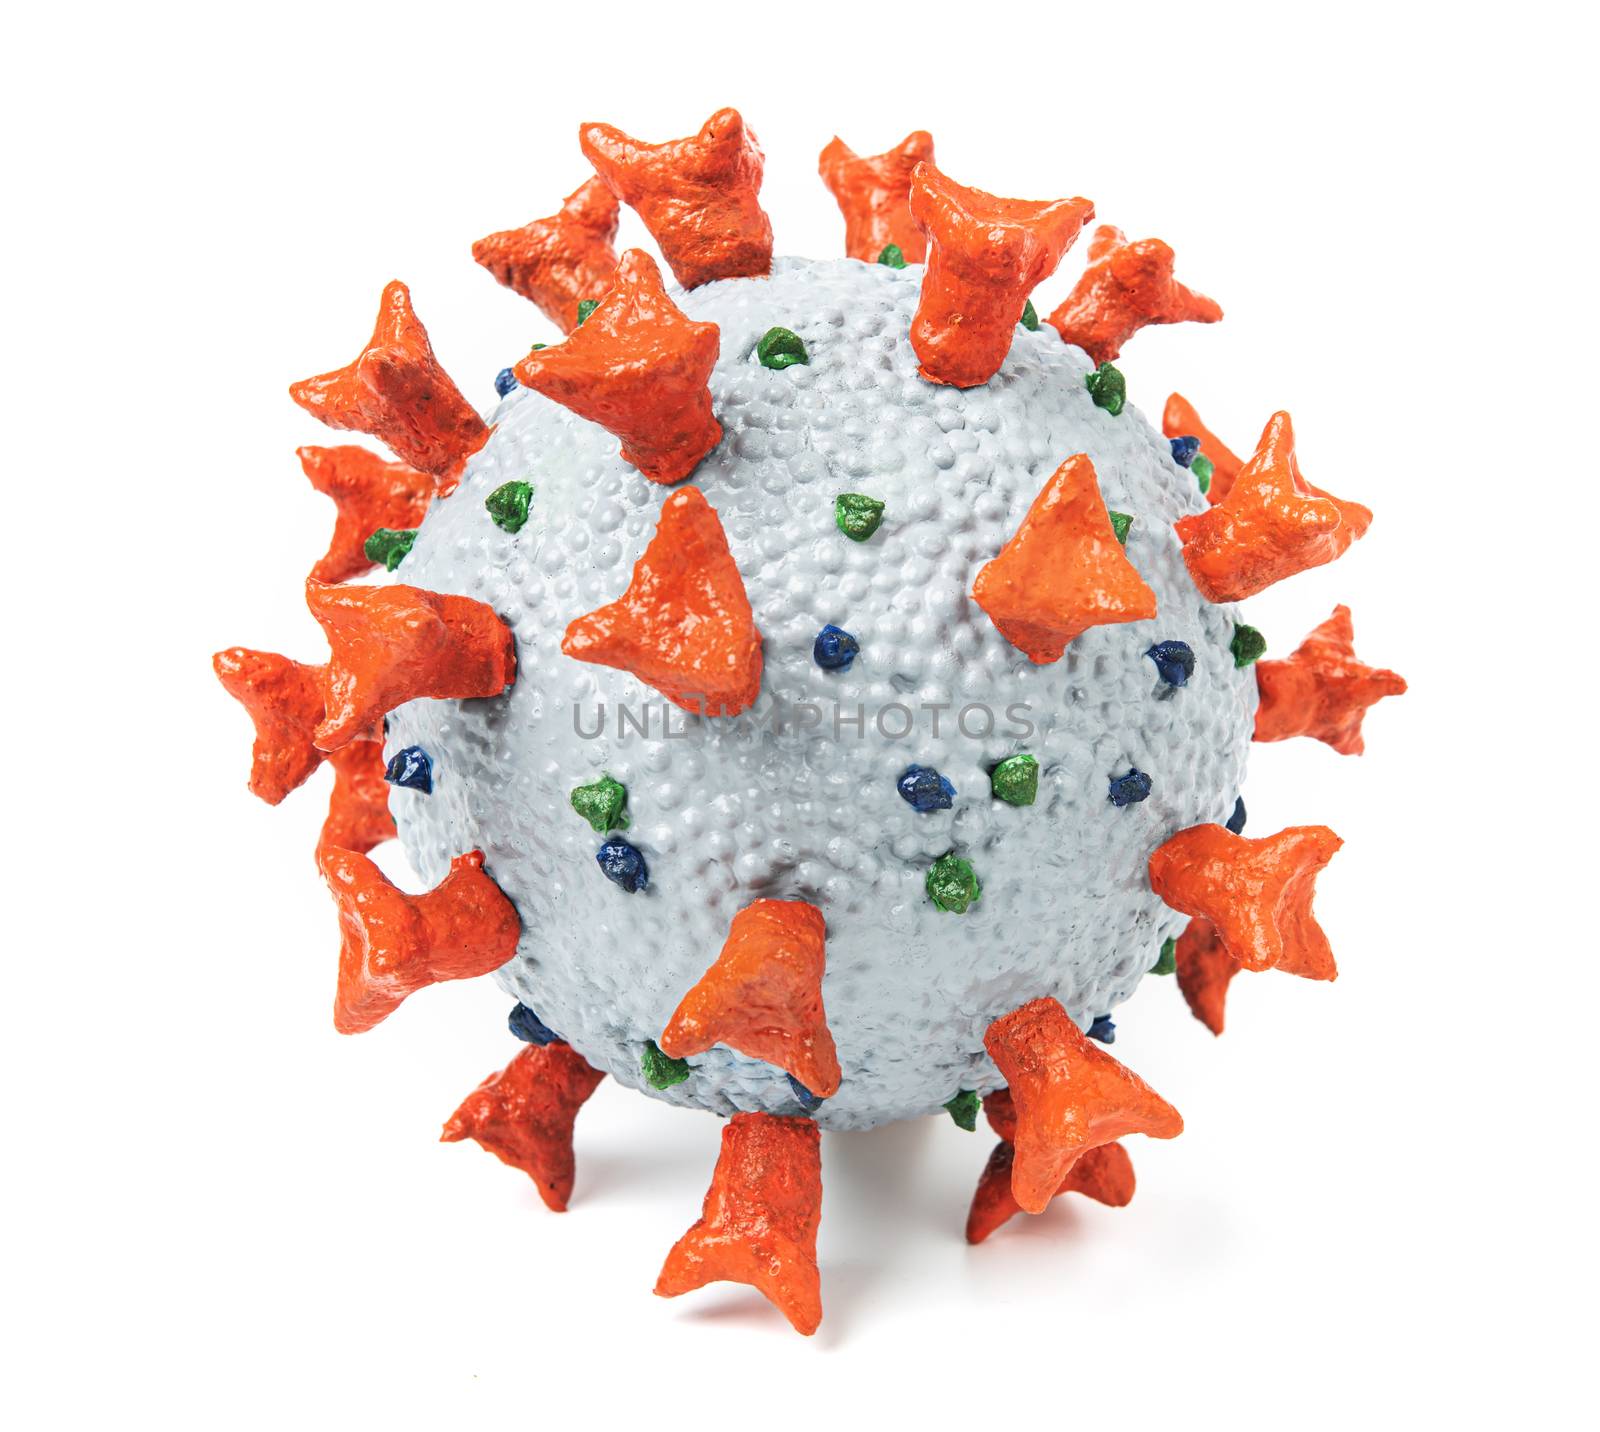 Coronavirus school model for science education  by fyletto